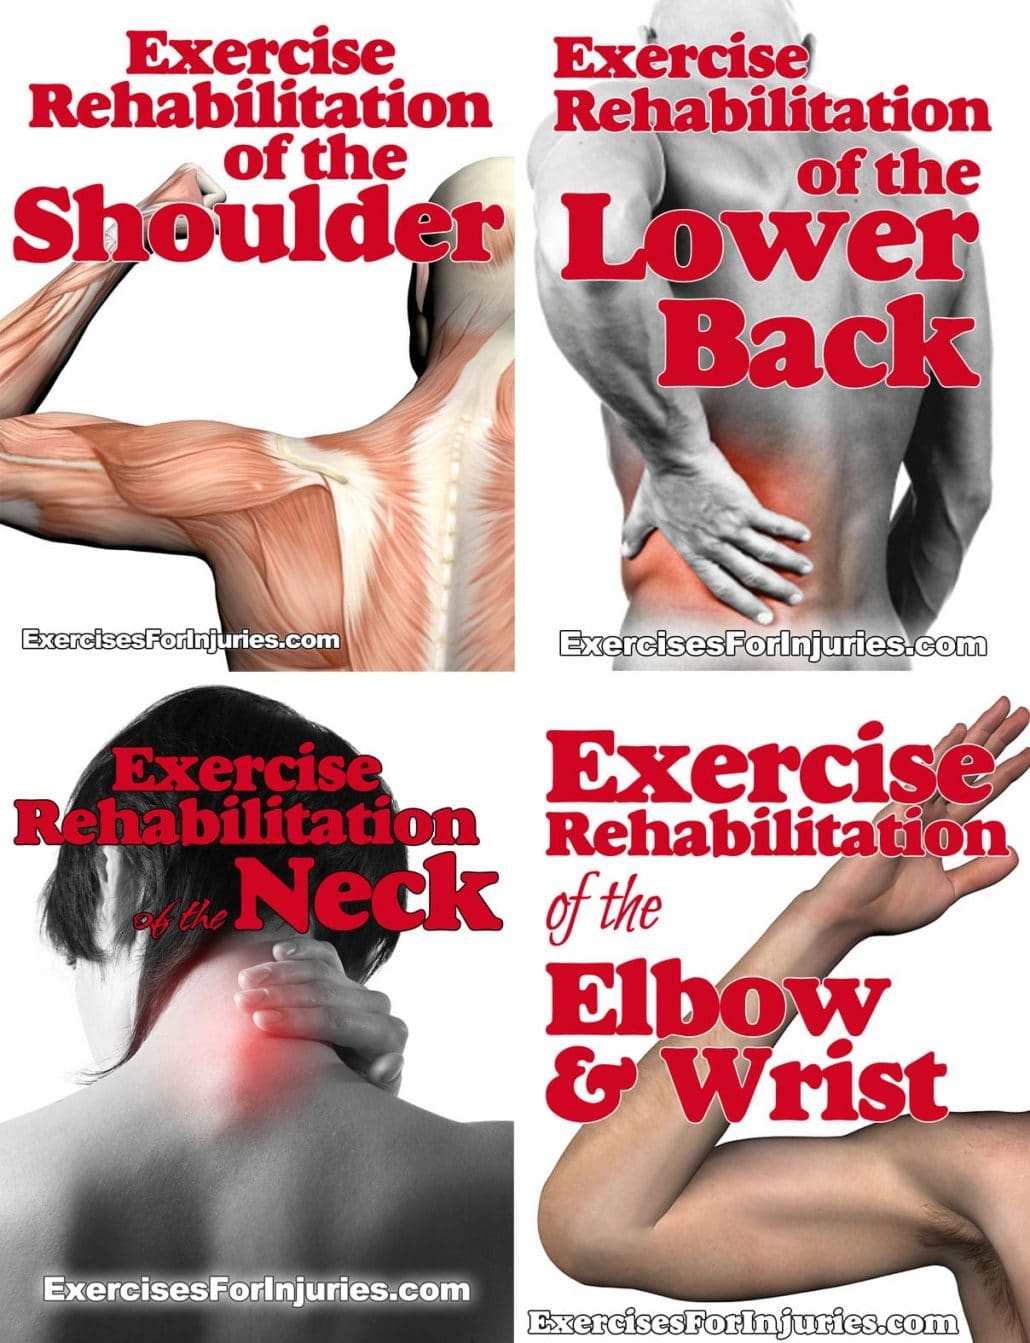 Exercise Rehabilitation of the Upper Body